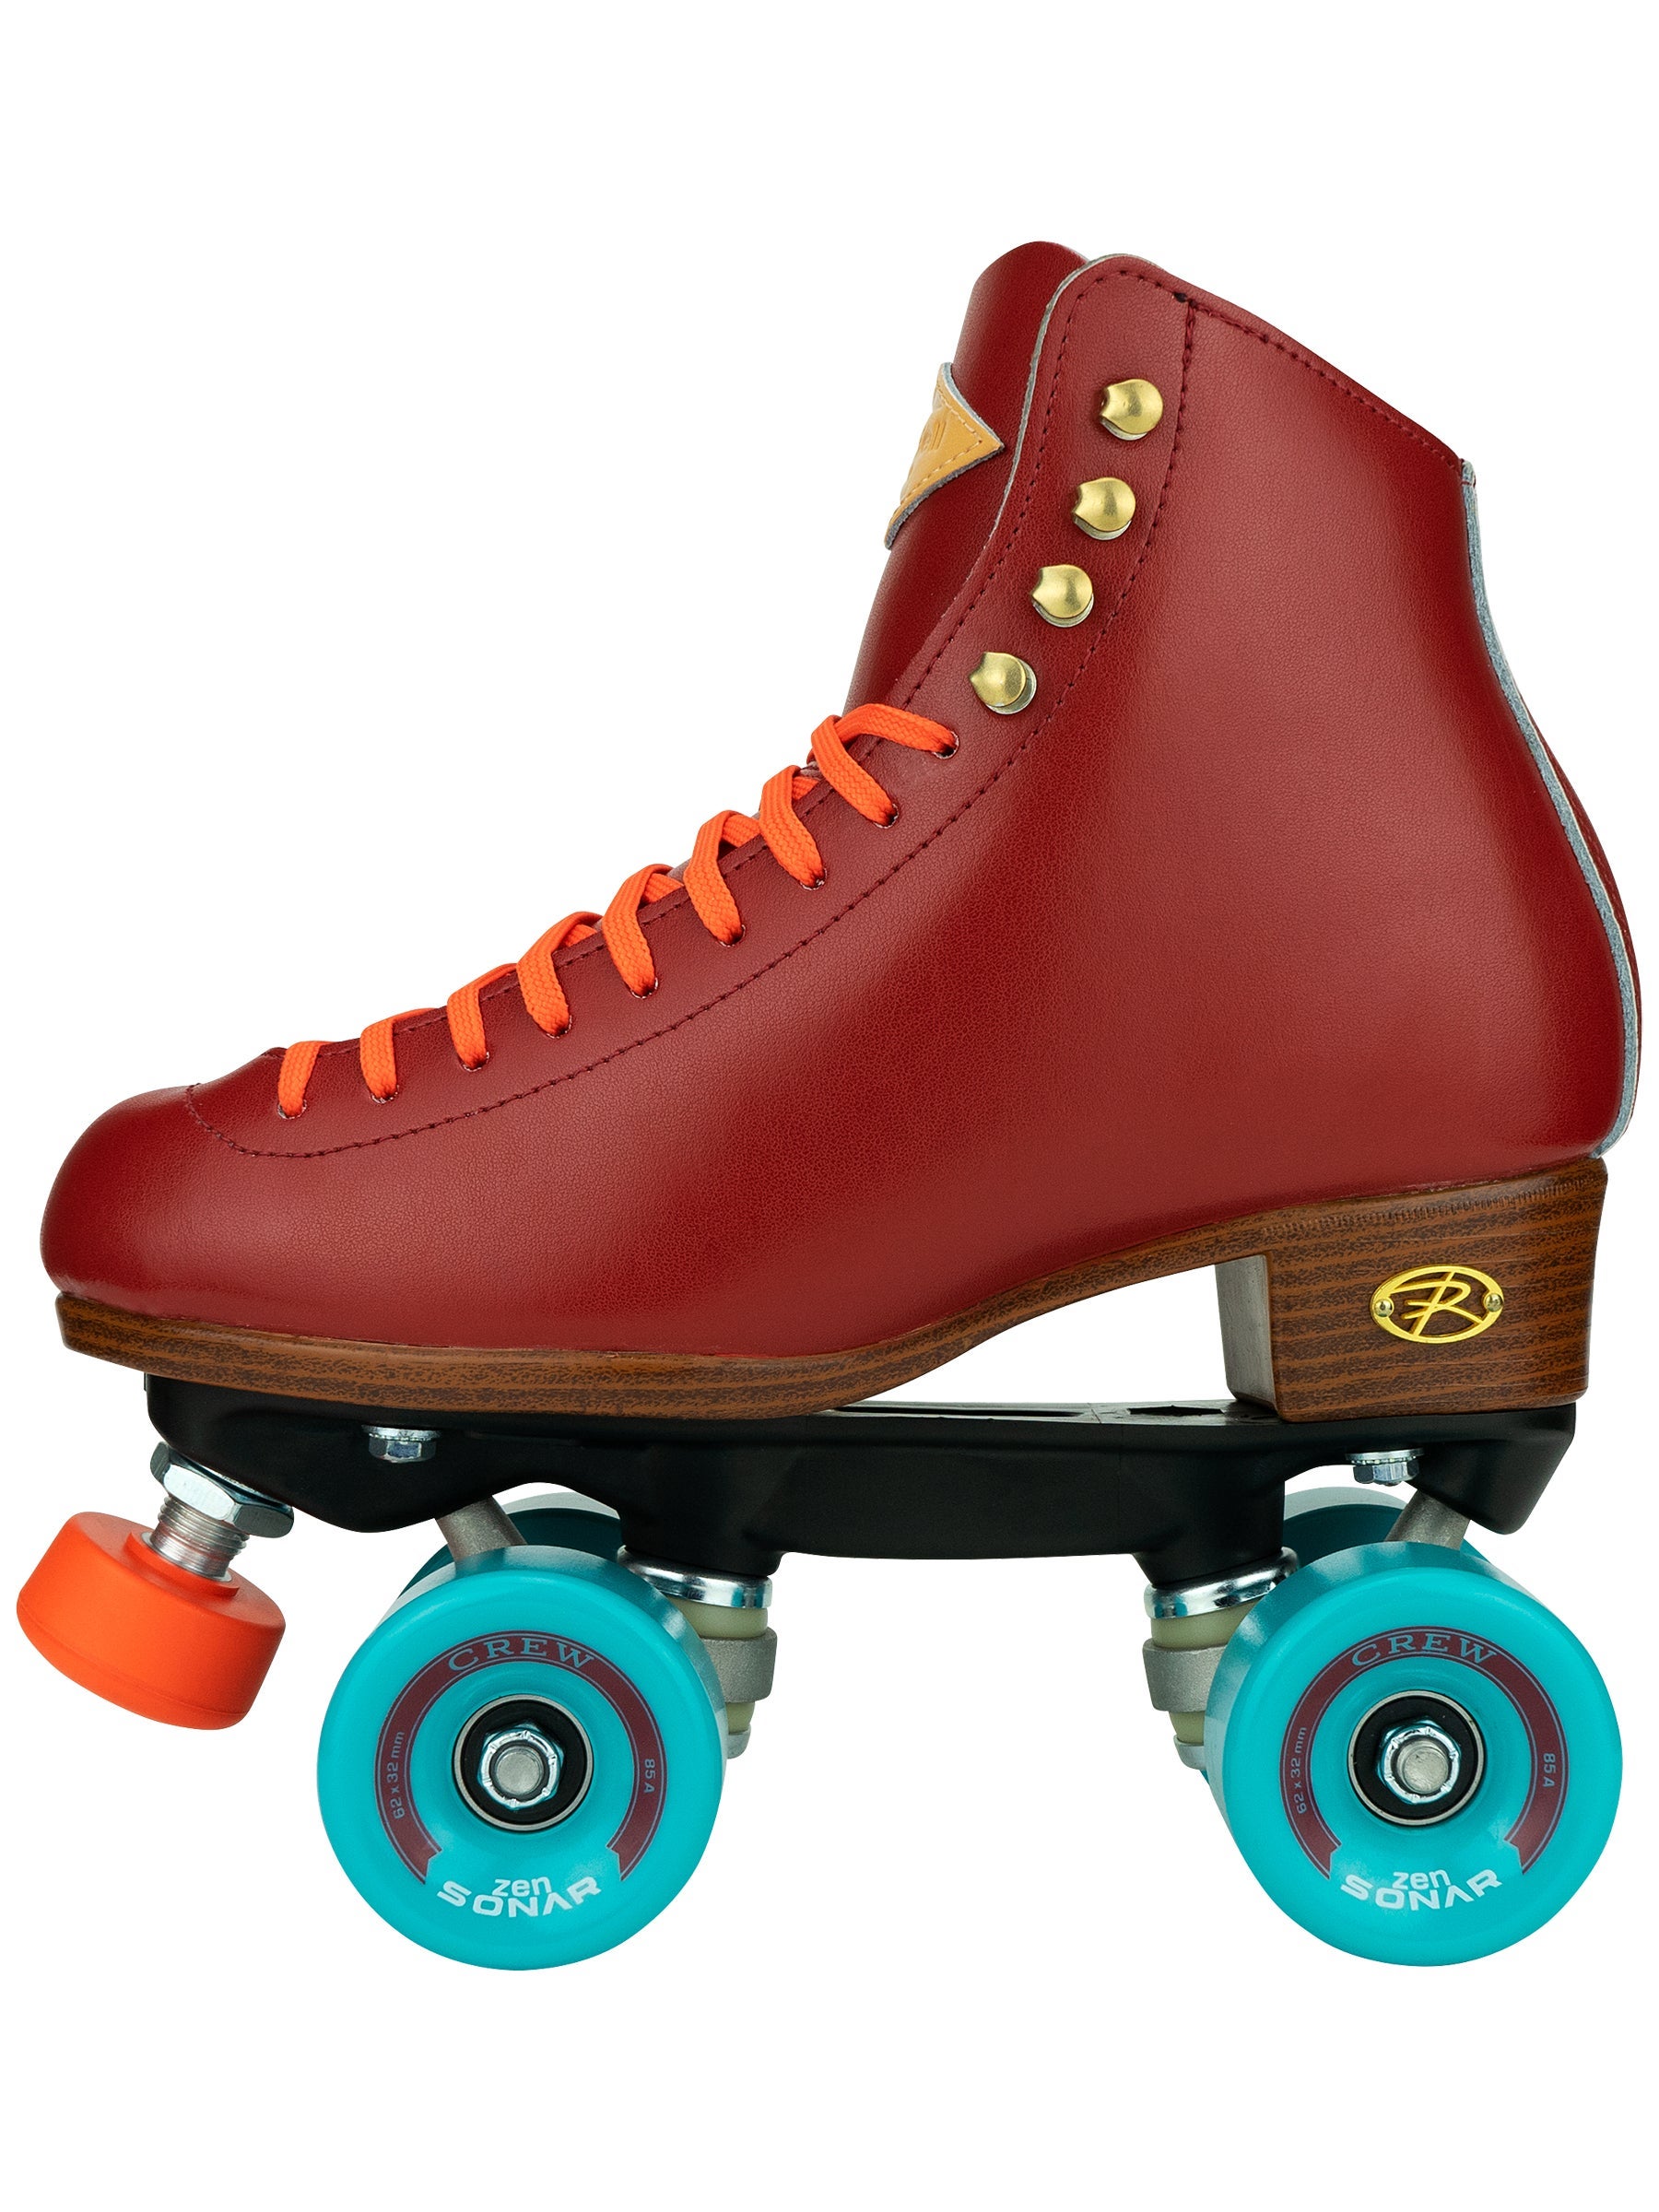 Adjustable Toe Stop Lock Nut & Washer for Quad Roller Skates Lot of 2 Each 